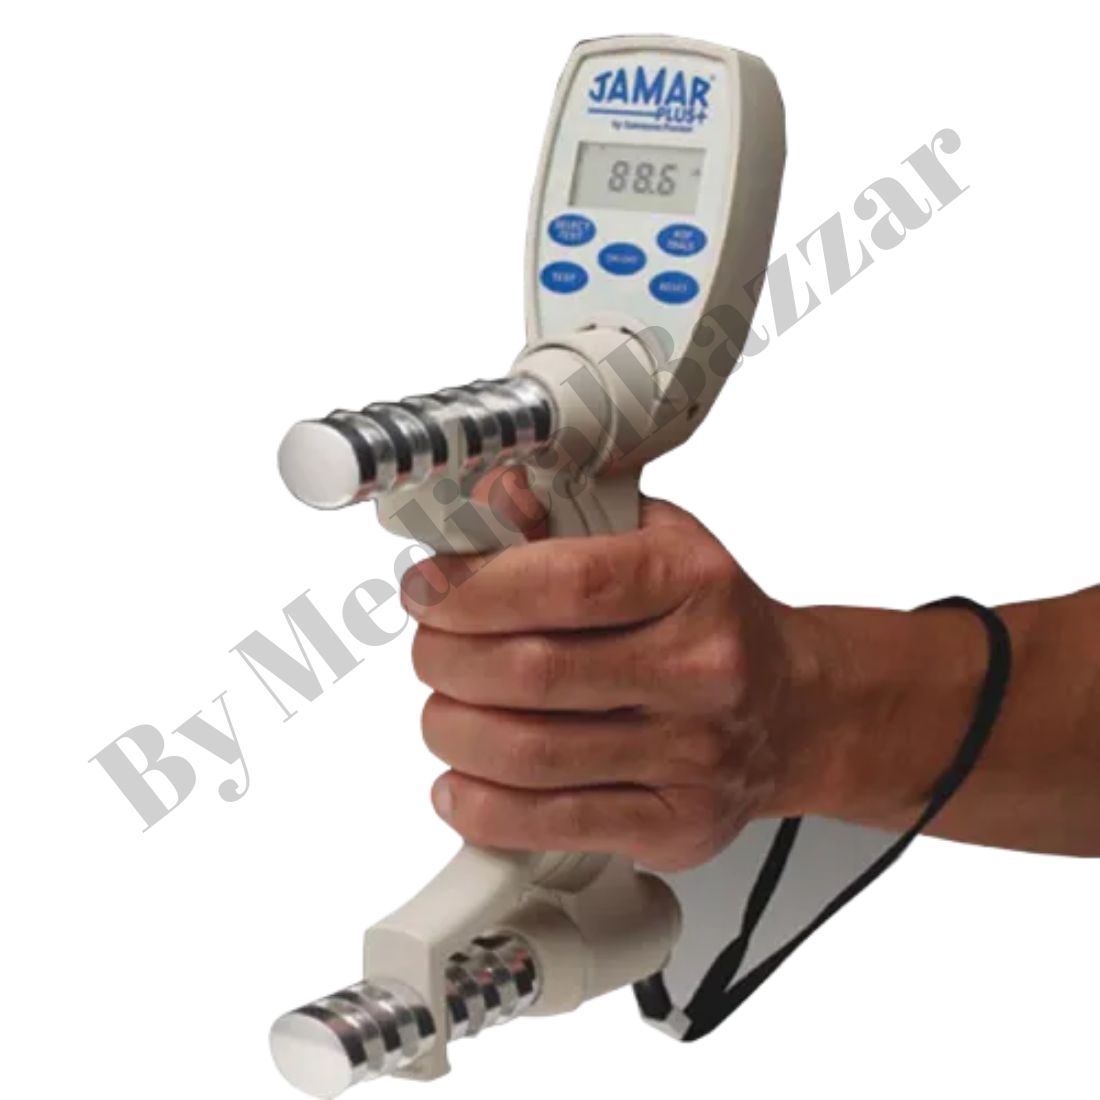 Jamar Digital hand dynamometer Plus - 200 Lbs